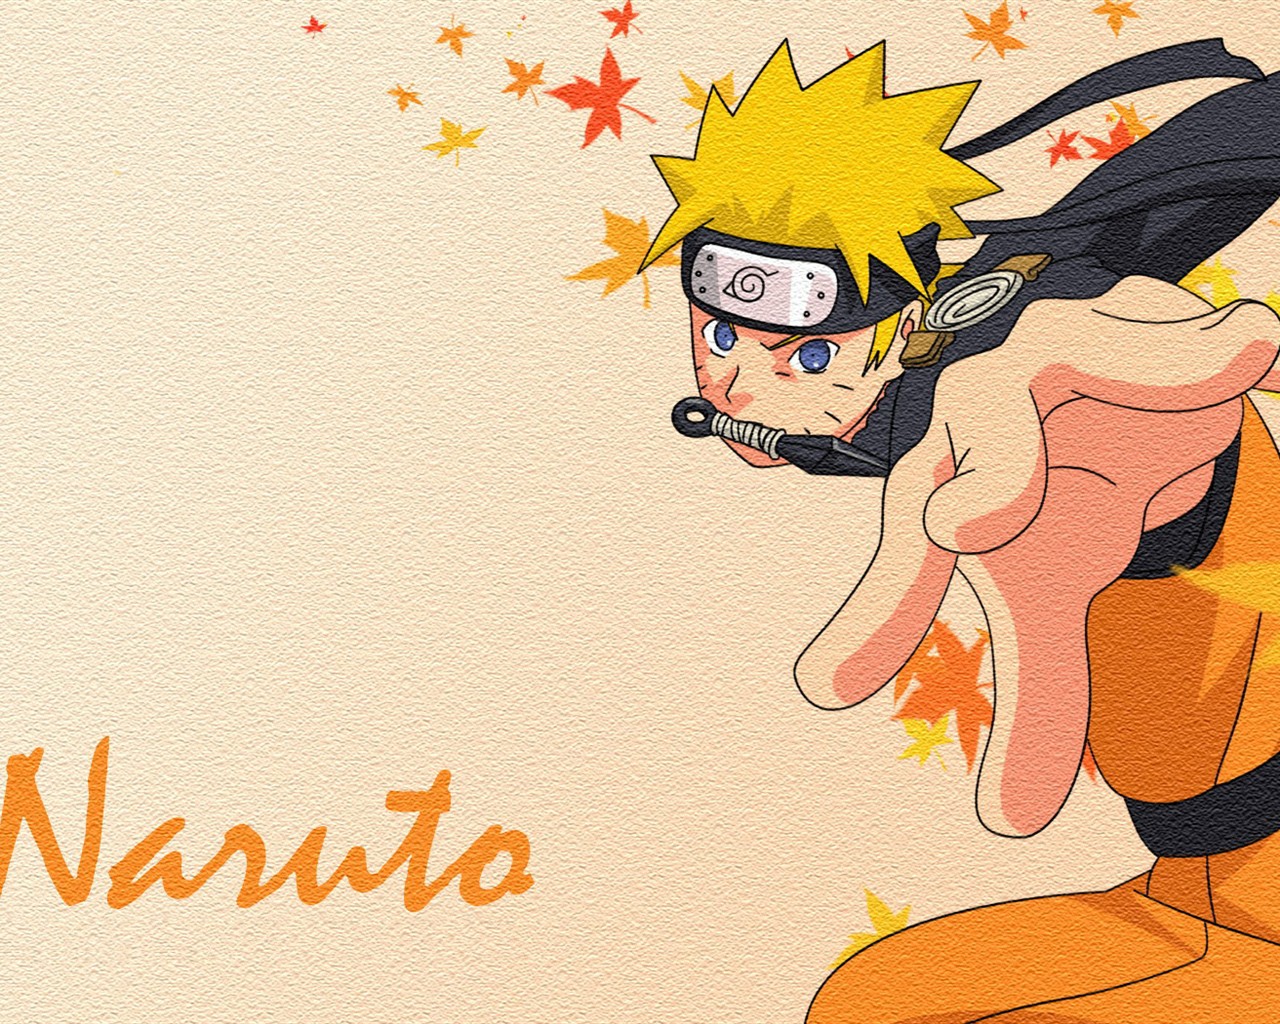 Naruto wallpapers album (2) #9 - 1280x1024